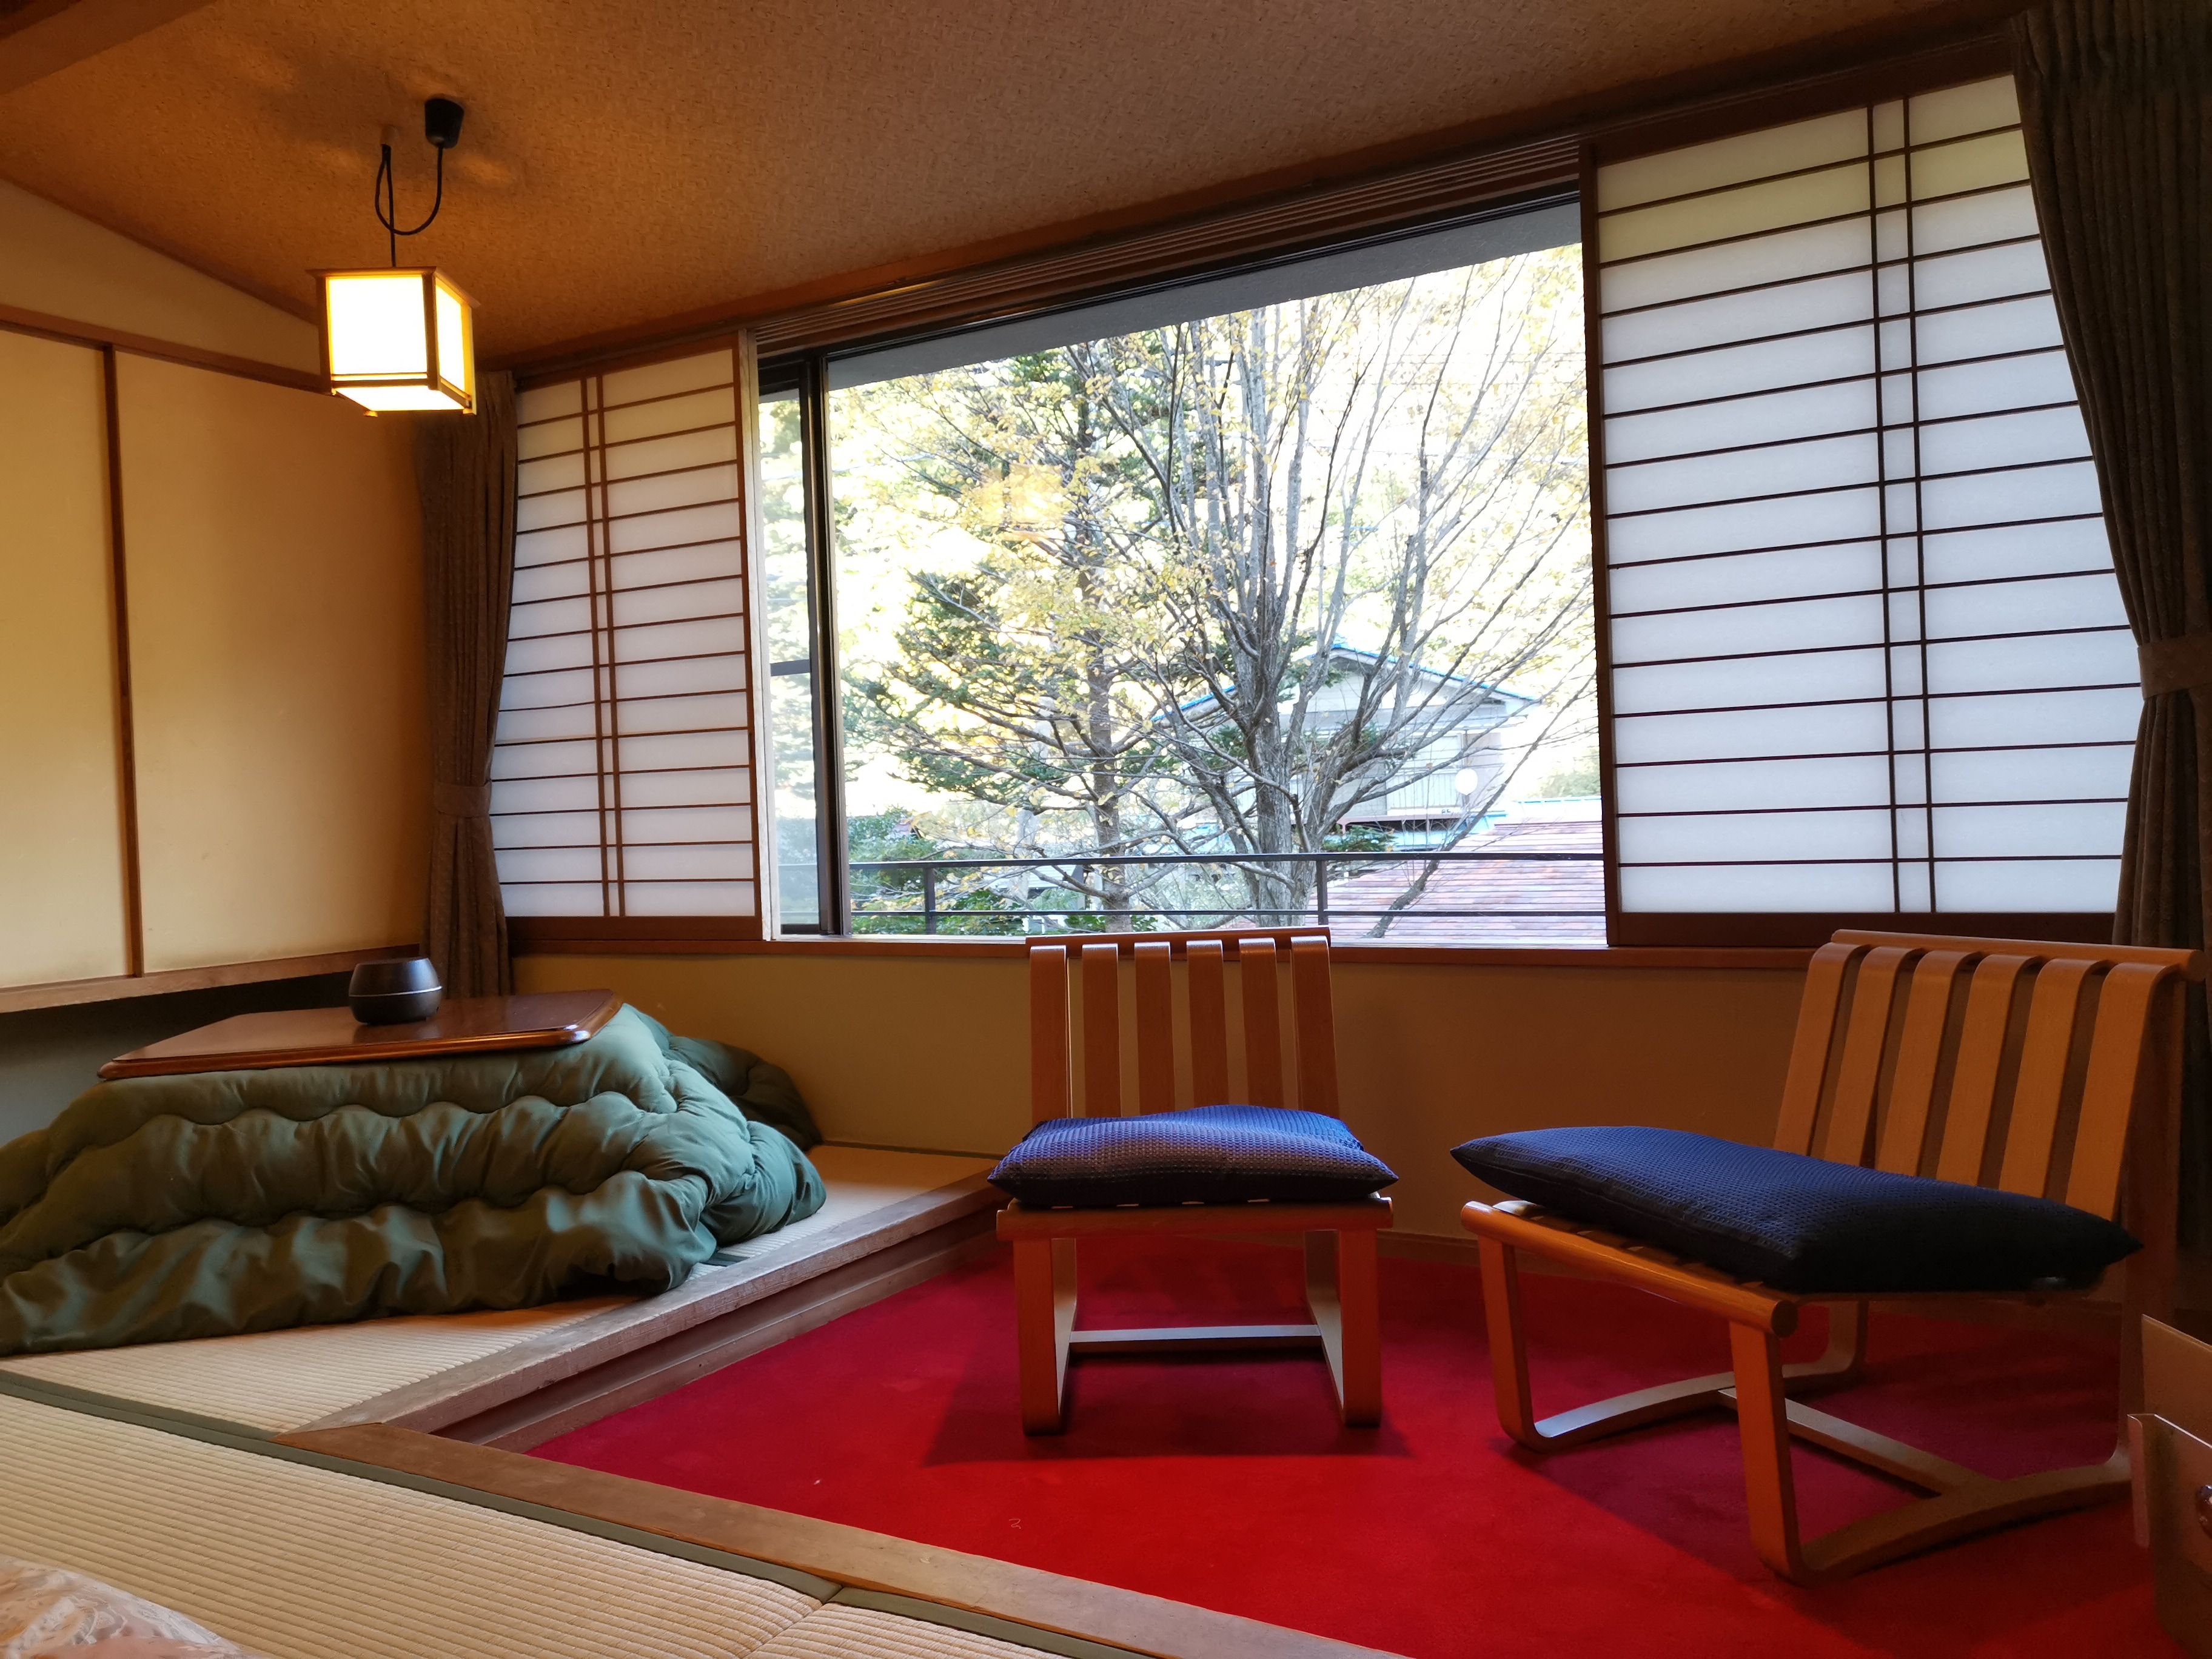 Standard room with kotatsu